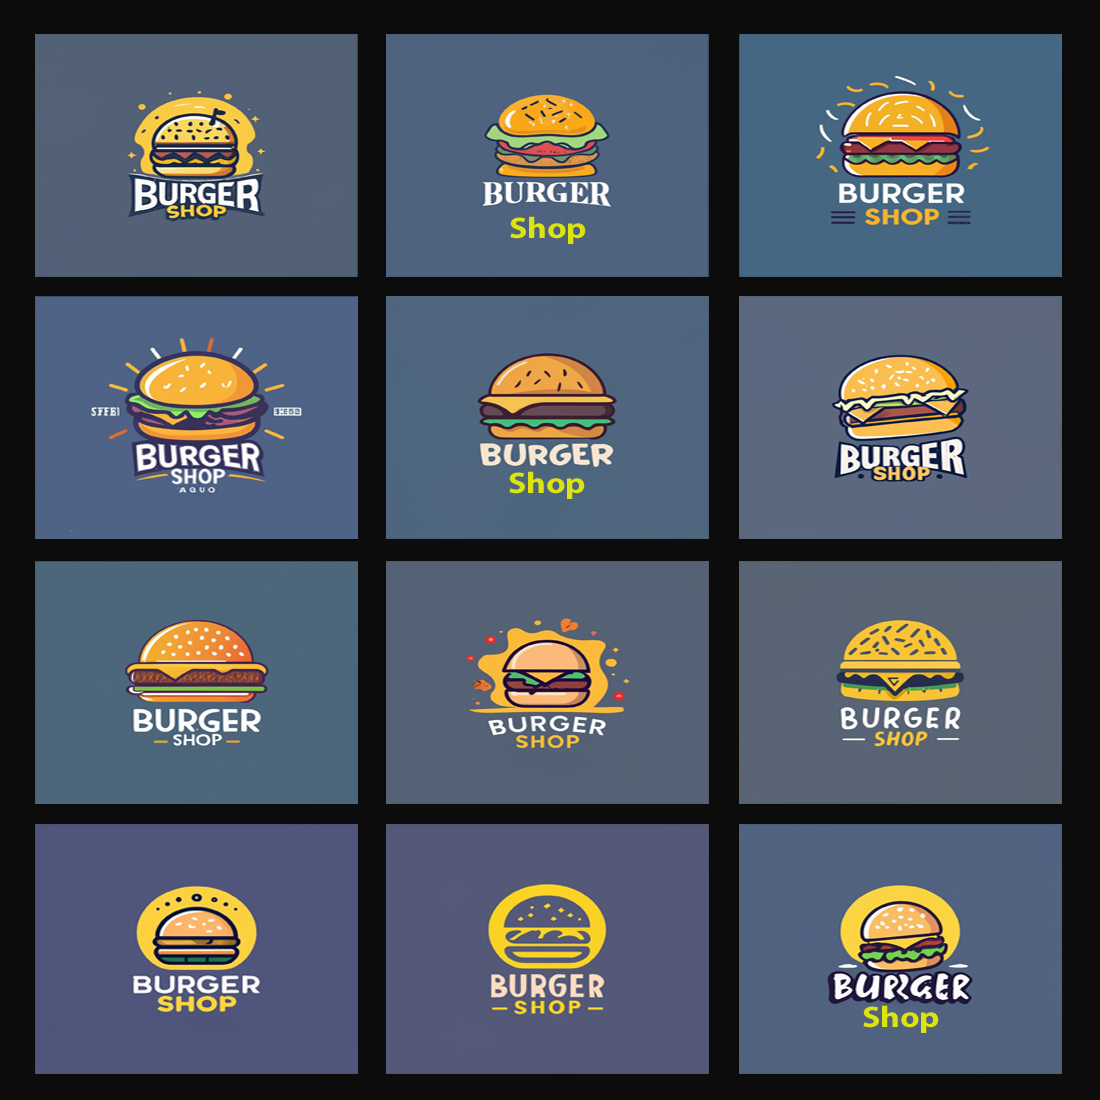 Burger Shop - Logo Design Template Total = 12 cover image.